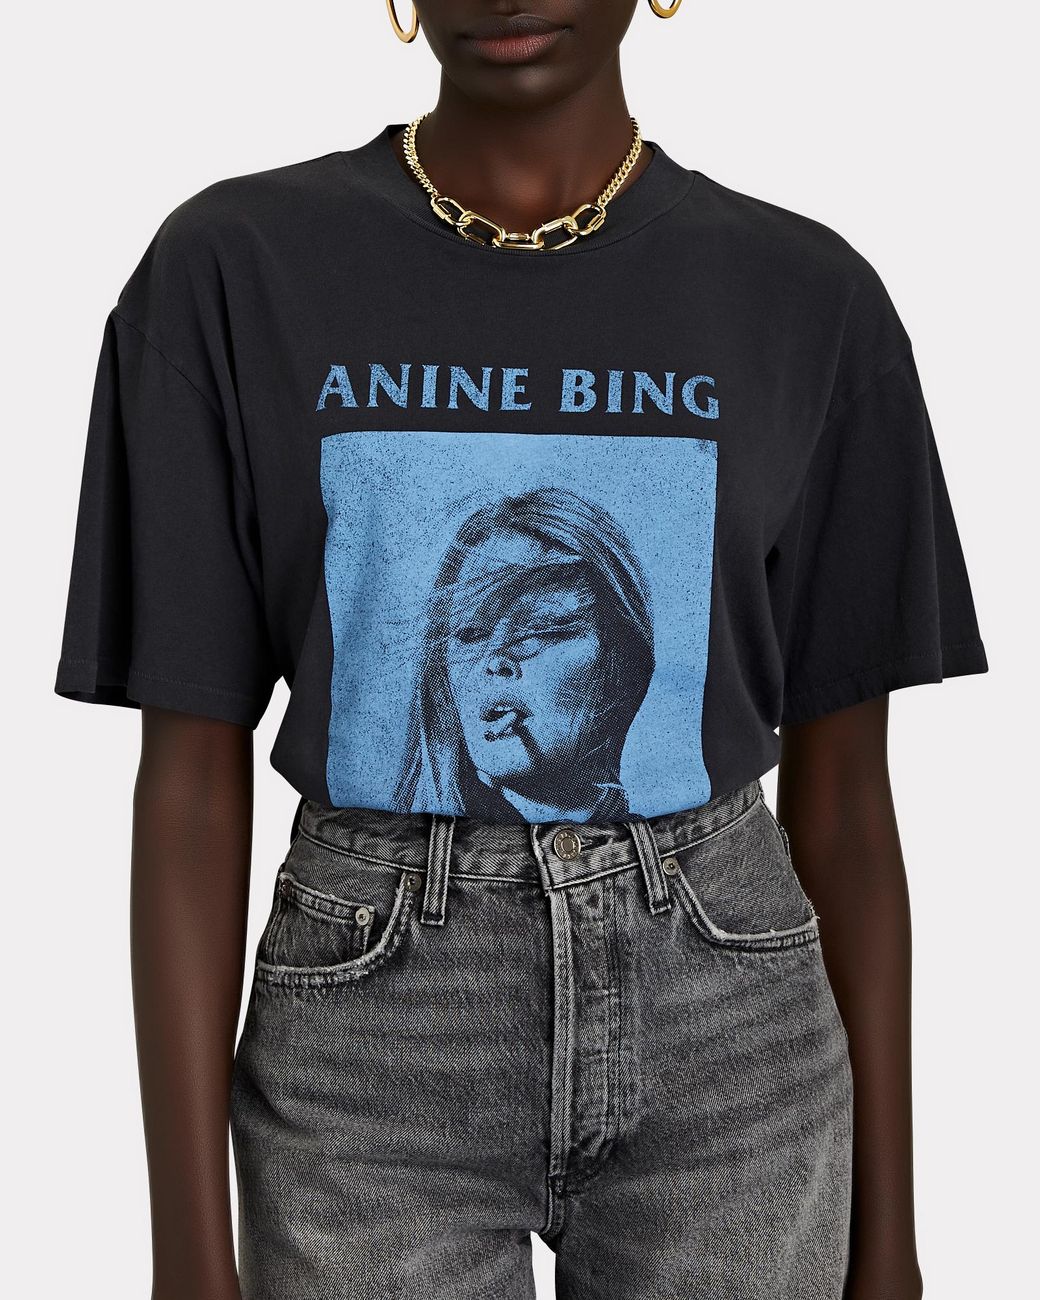 Anine Bing Ashton Ab X To X Brigitte Bardot T-shirt in Black | Lyst